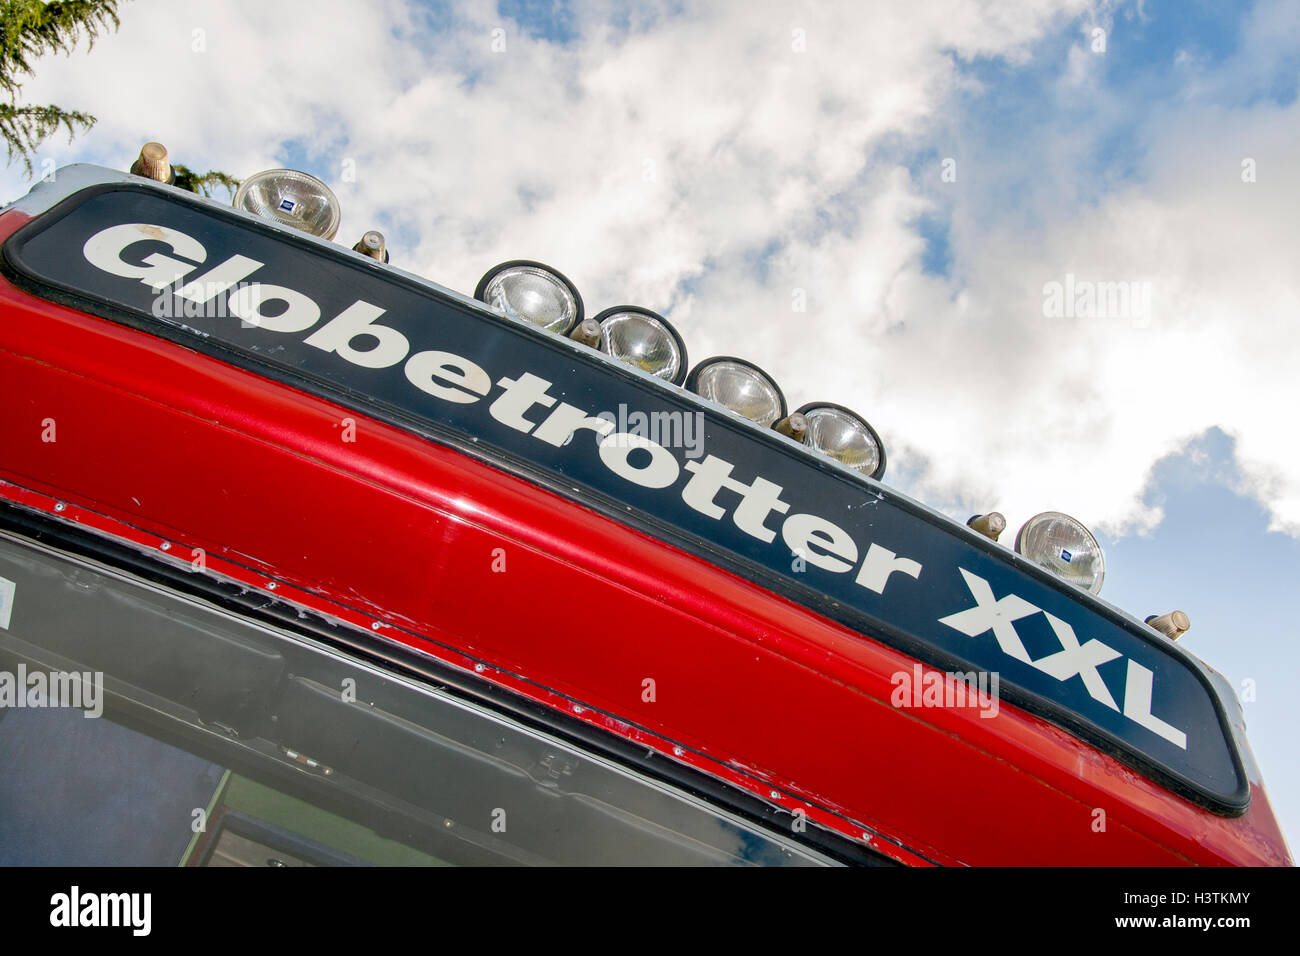 Globetrotter xxl Cab Stock Photo